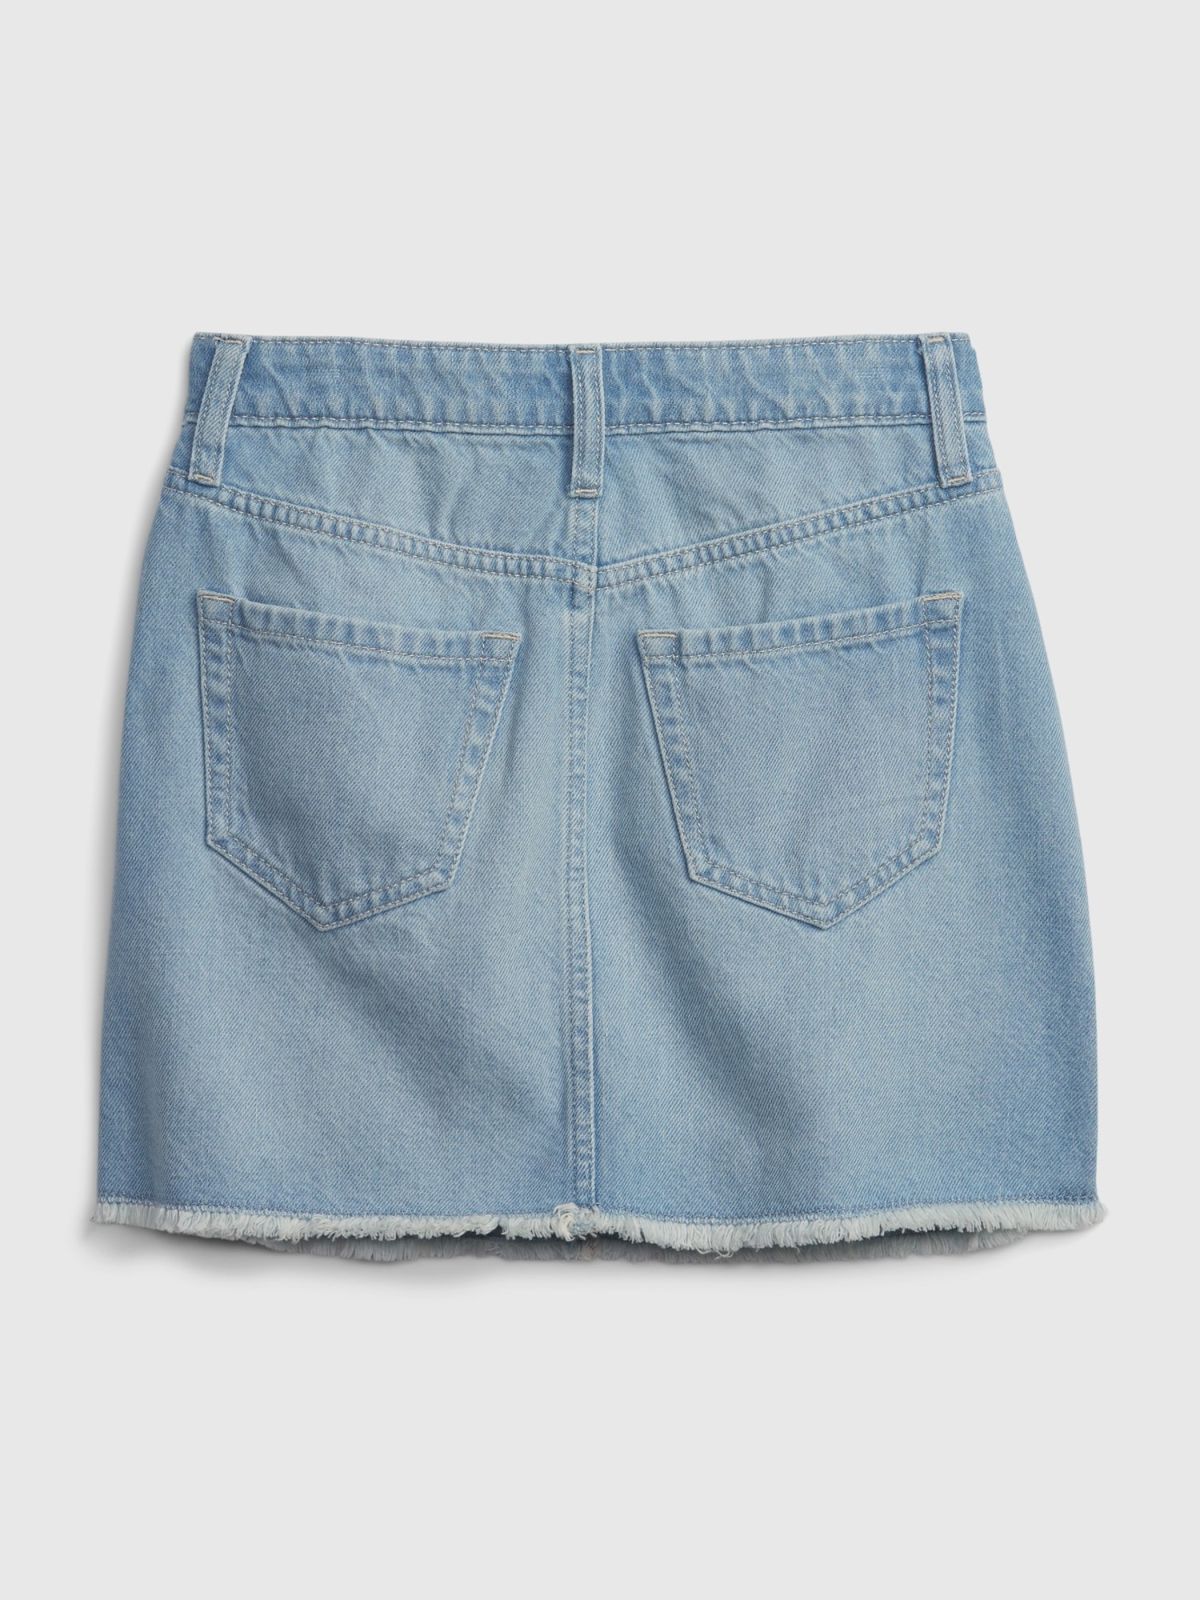  חצאית ג'ינס בעיטור אבנים / בנות של GAP